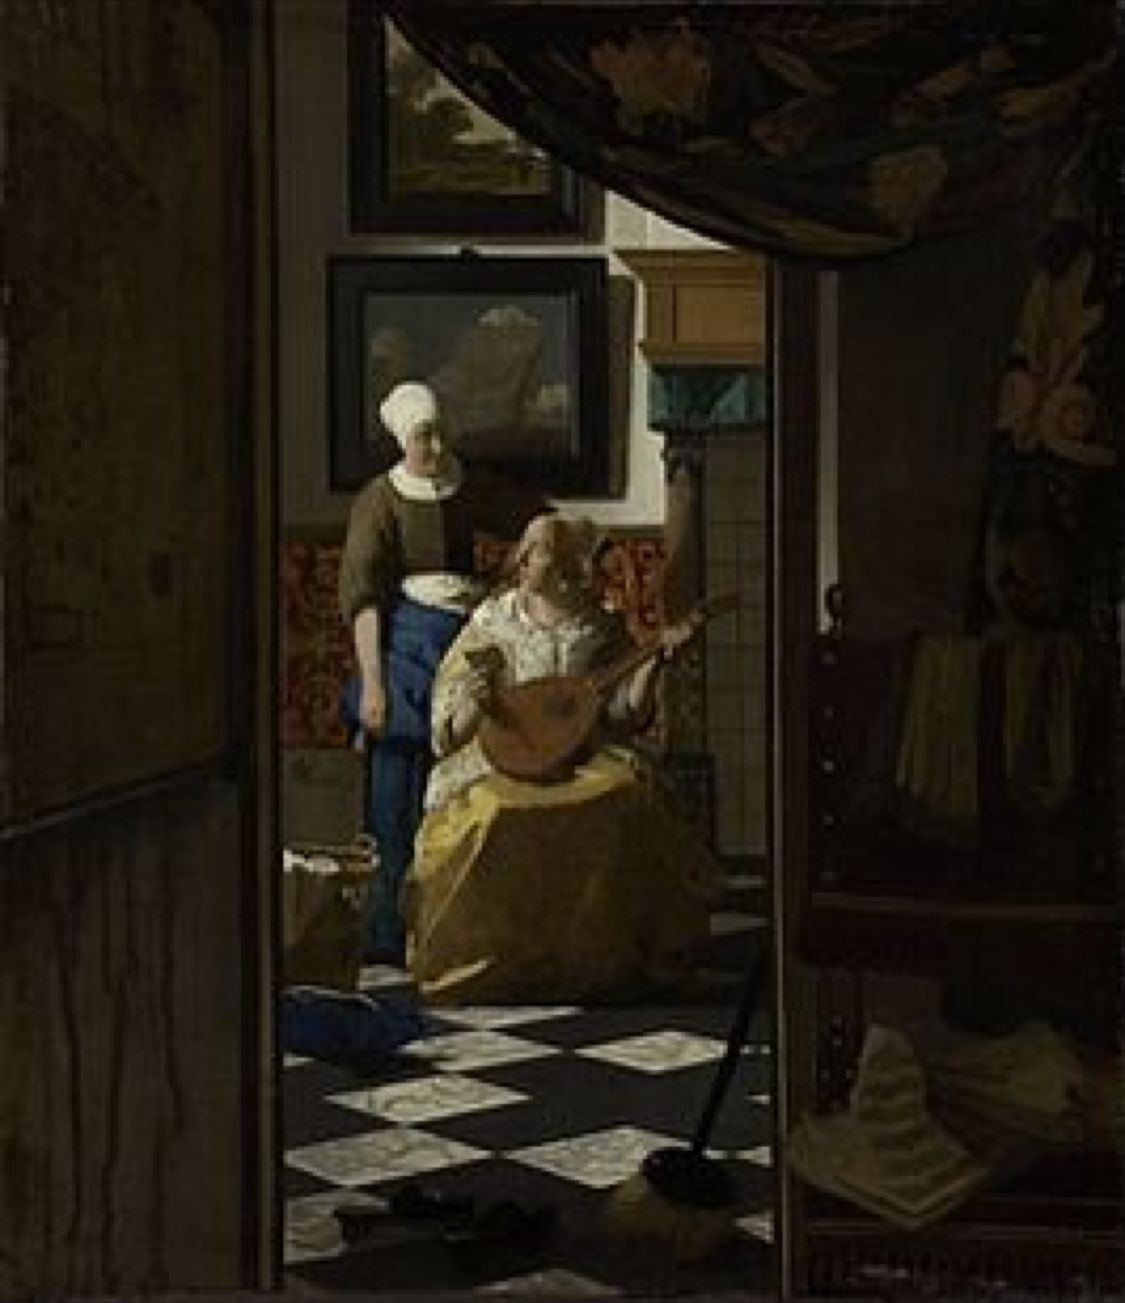 Behind my muse Vermeer: spicy symbolism behind his painting The Love Letter